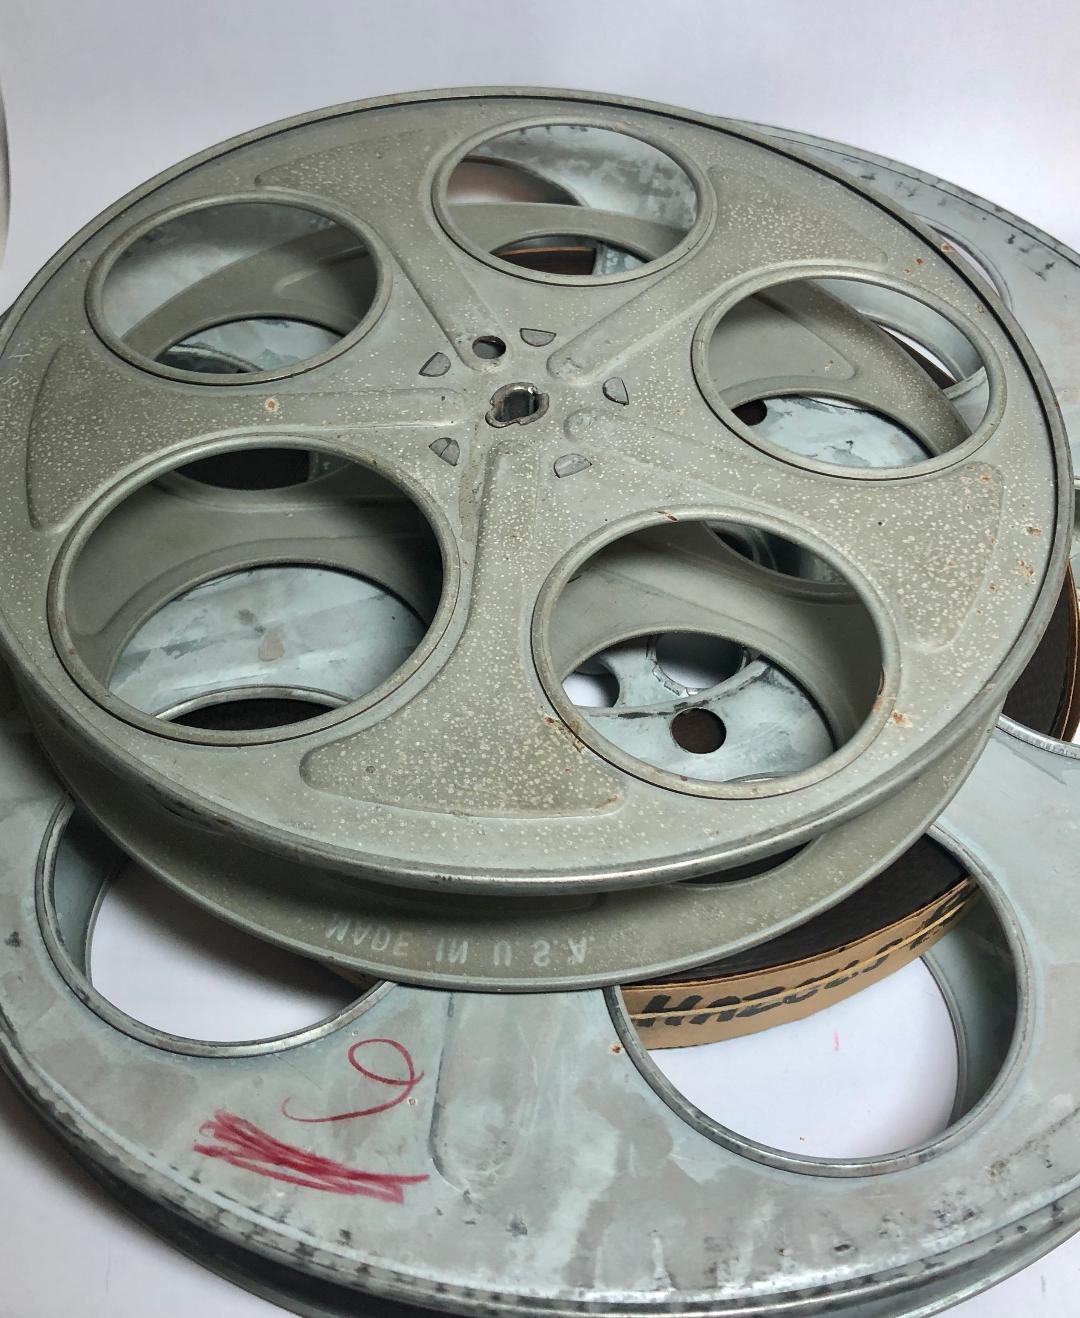 LARGE or SMALL 35mm Vintage Industrial Film Reel Movie Theatre